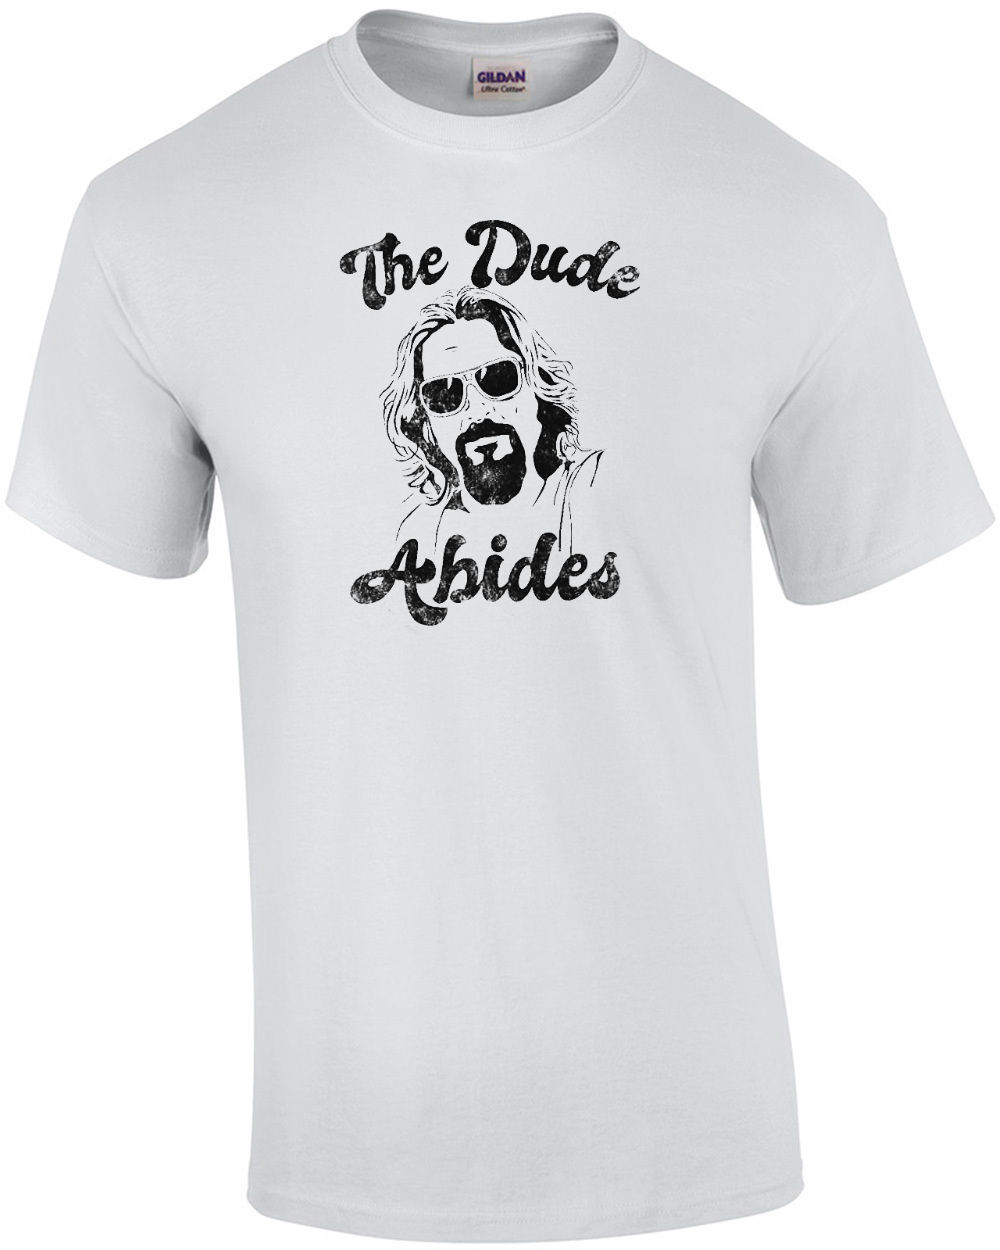 The Big Lebowski 90s Movie The Dude Abides T-Shirt